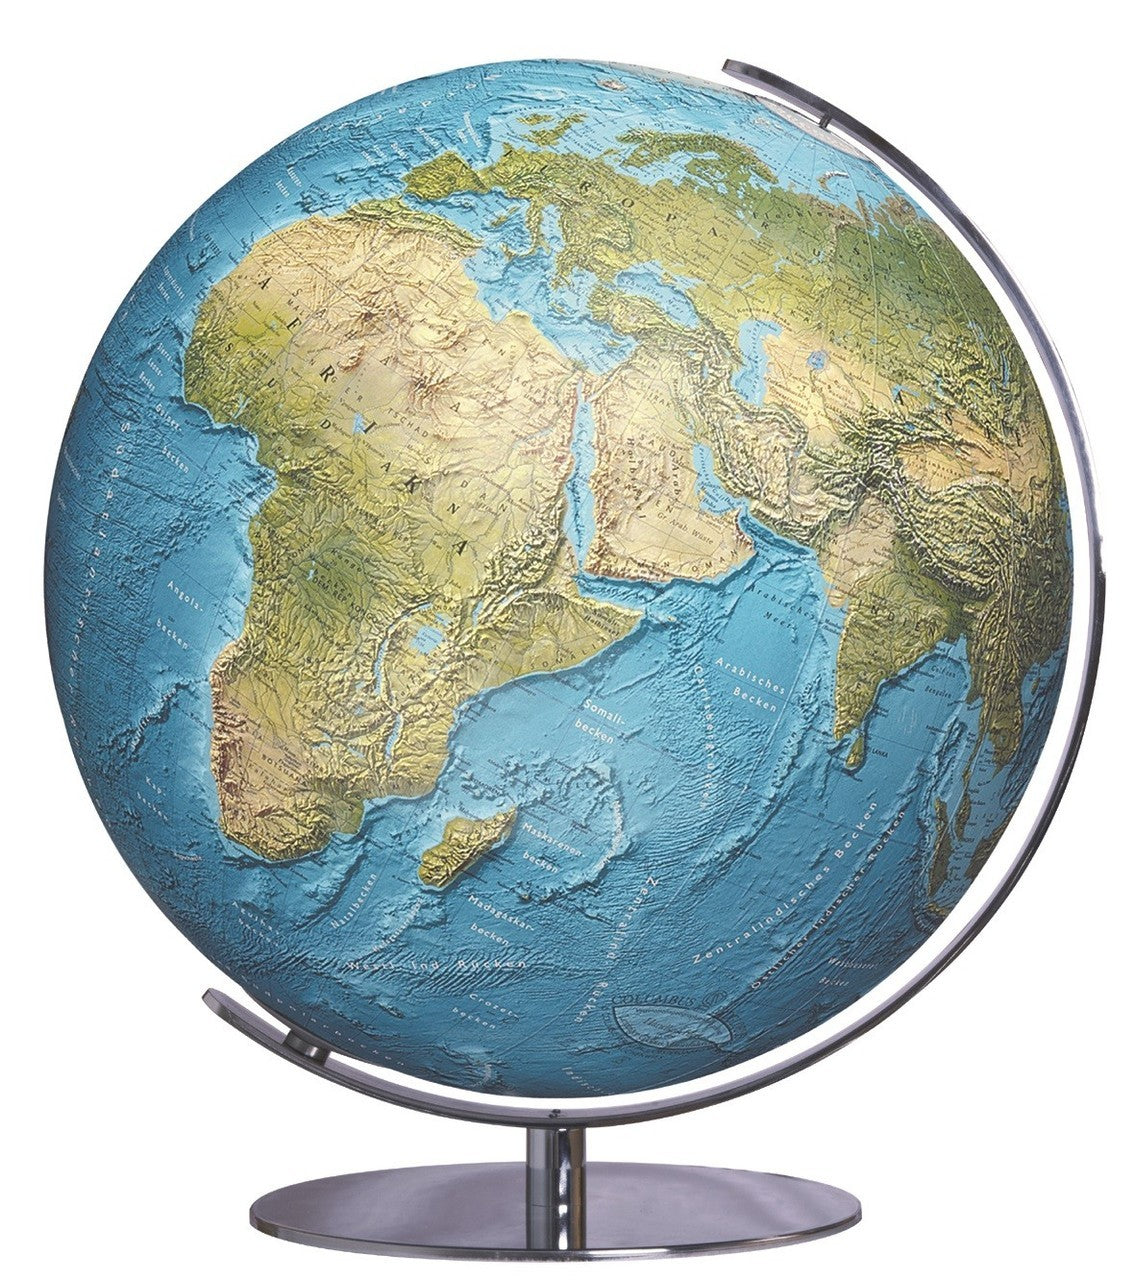 Ravensburg Illuminated 13 Inch Desktop World Globe By Columbus Globes